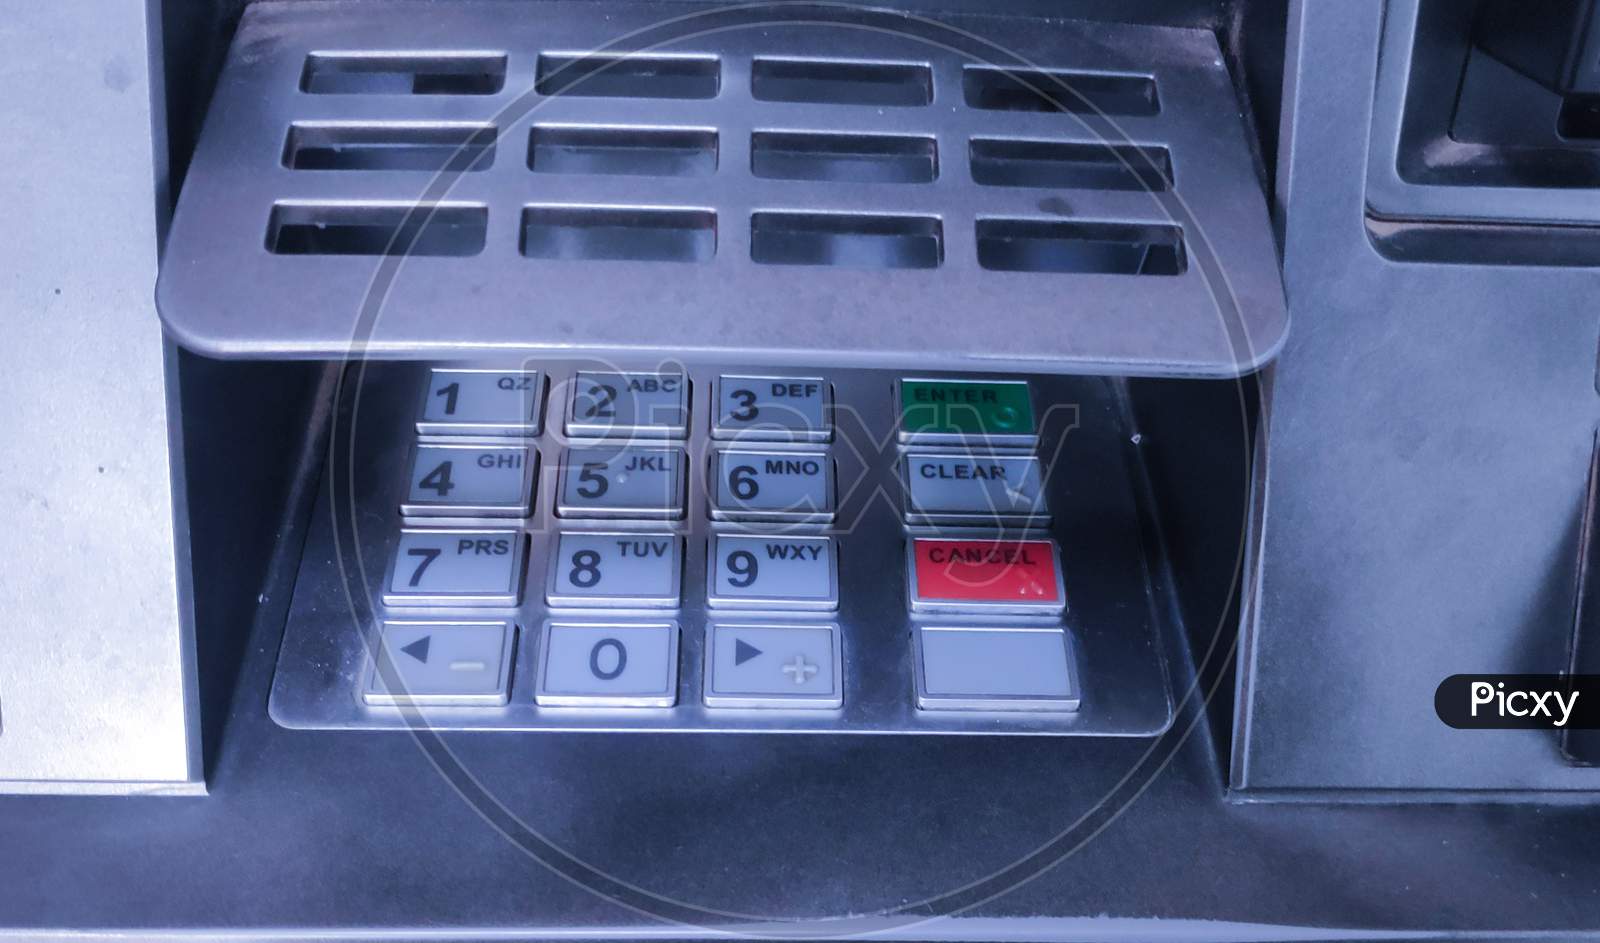 Modern ATM machine number panel setup